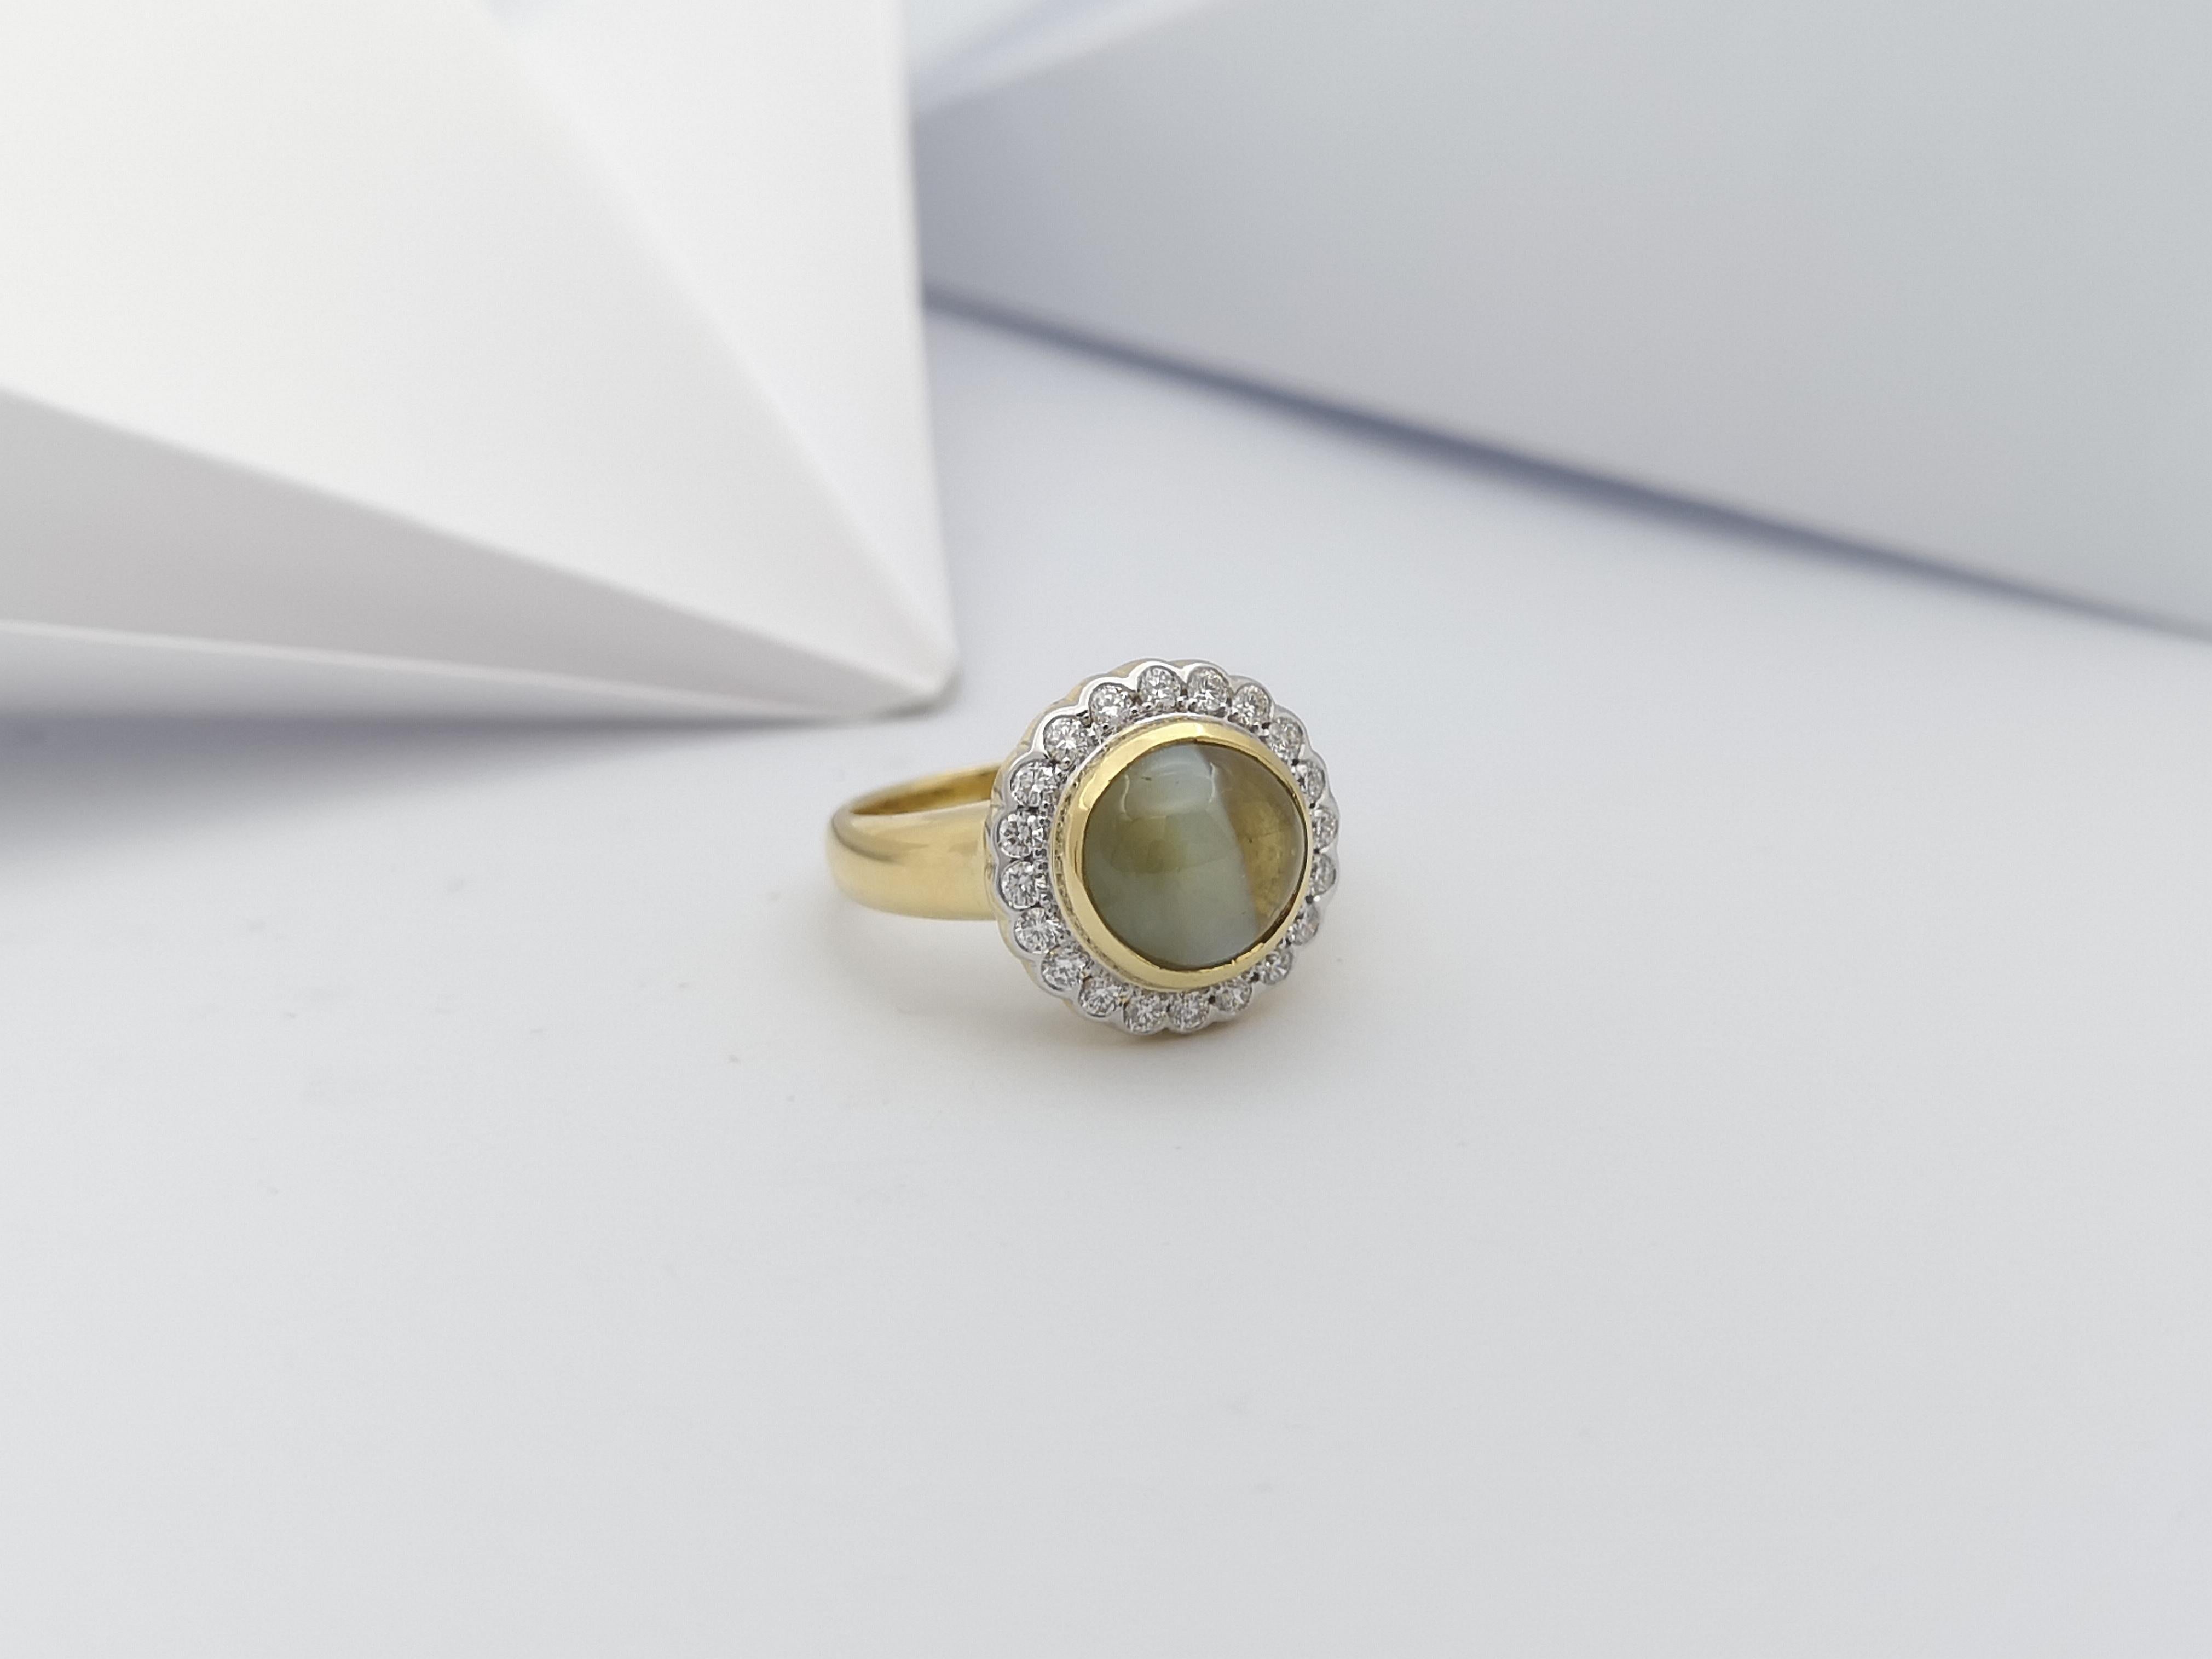 Chrysoberyl Cat's Eye with Diamond Ring Set in 18 Karat Gold For Sale 5